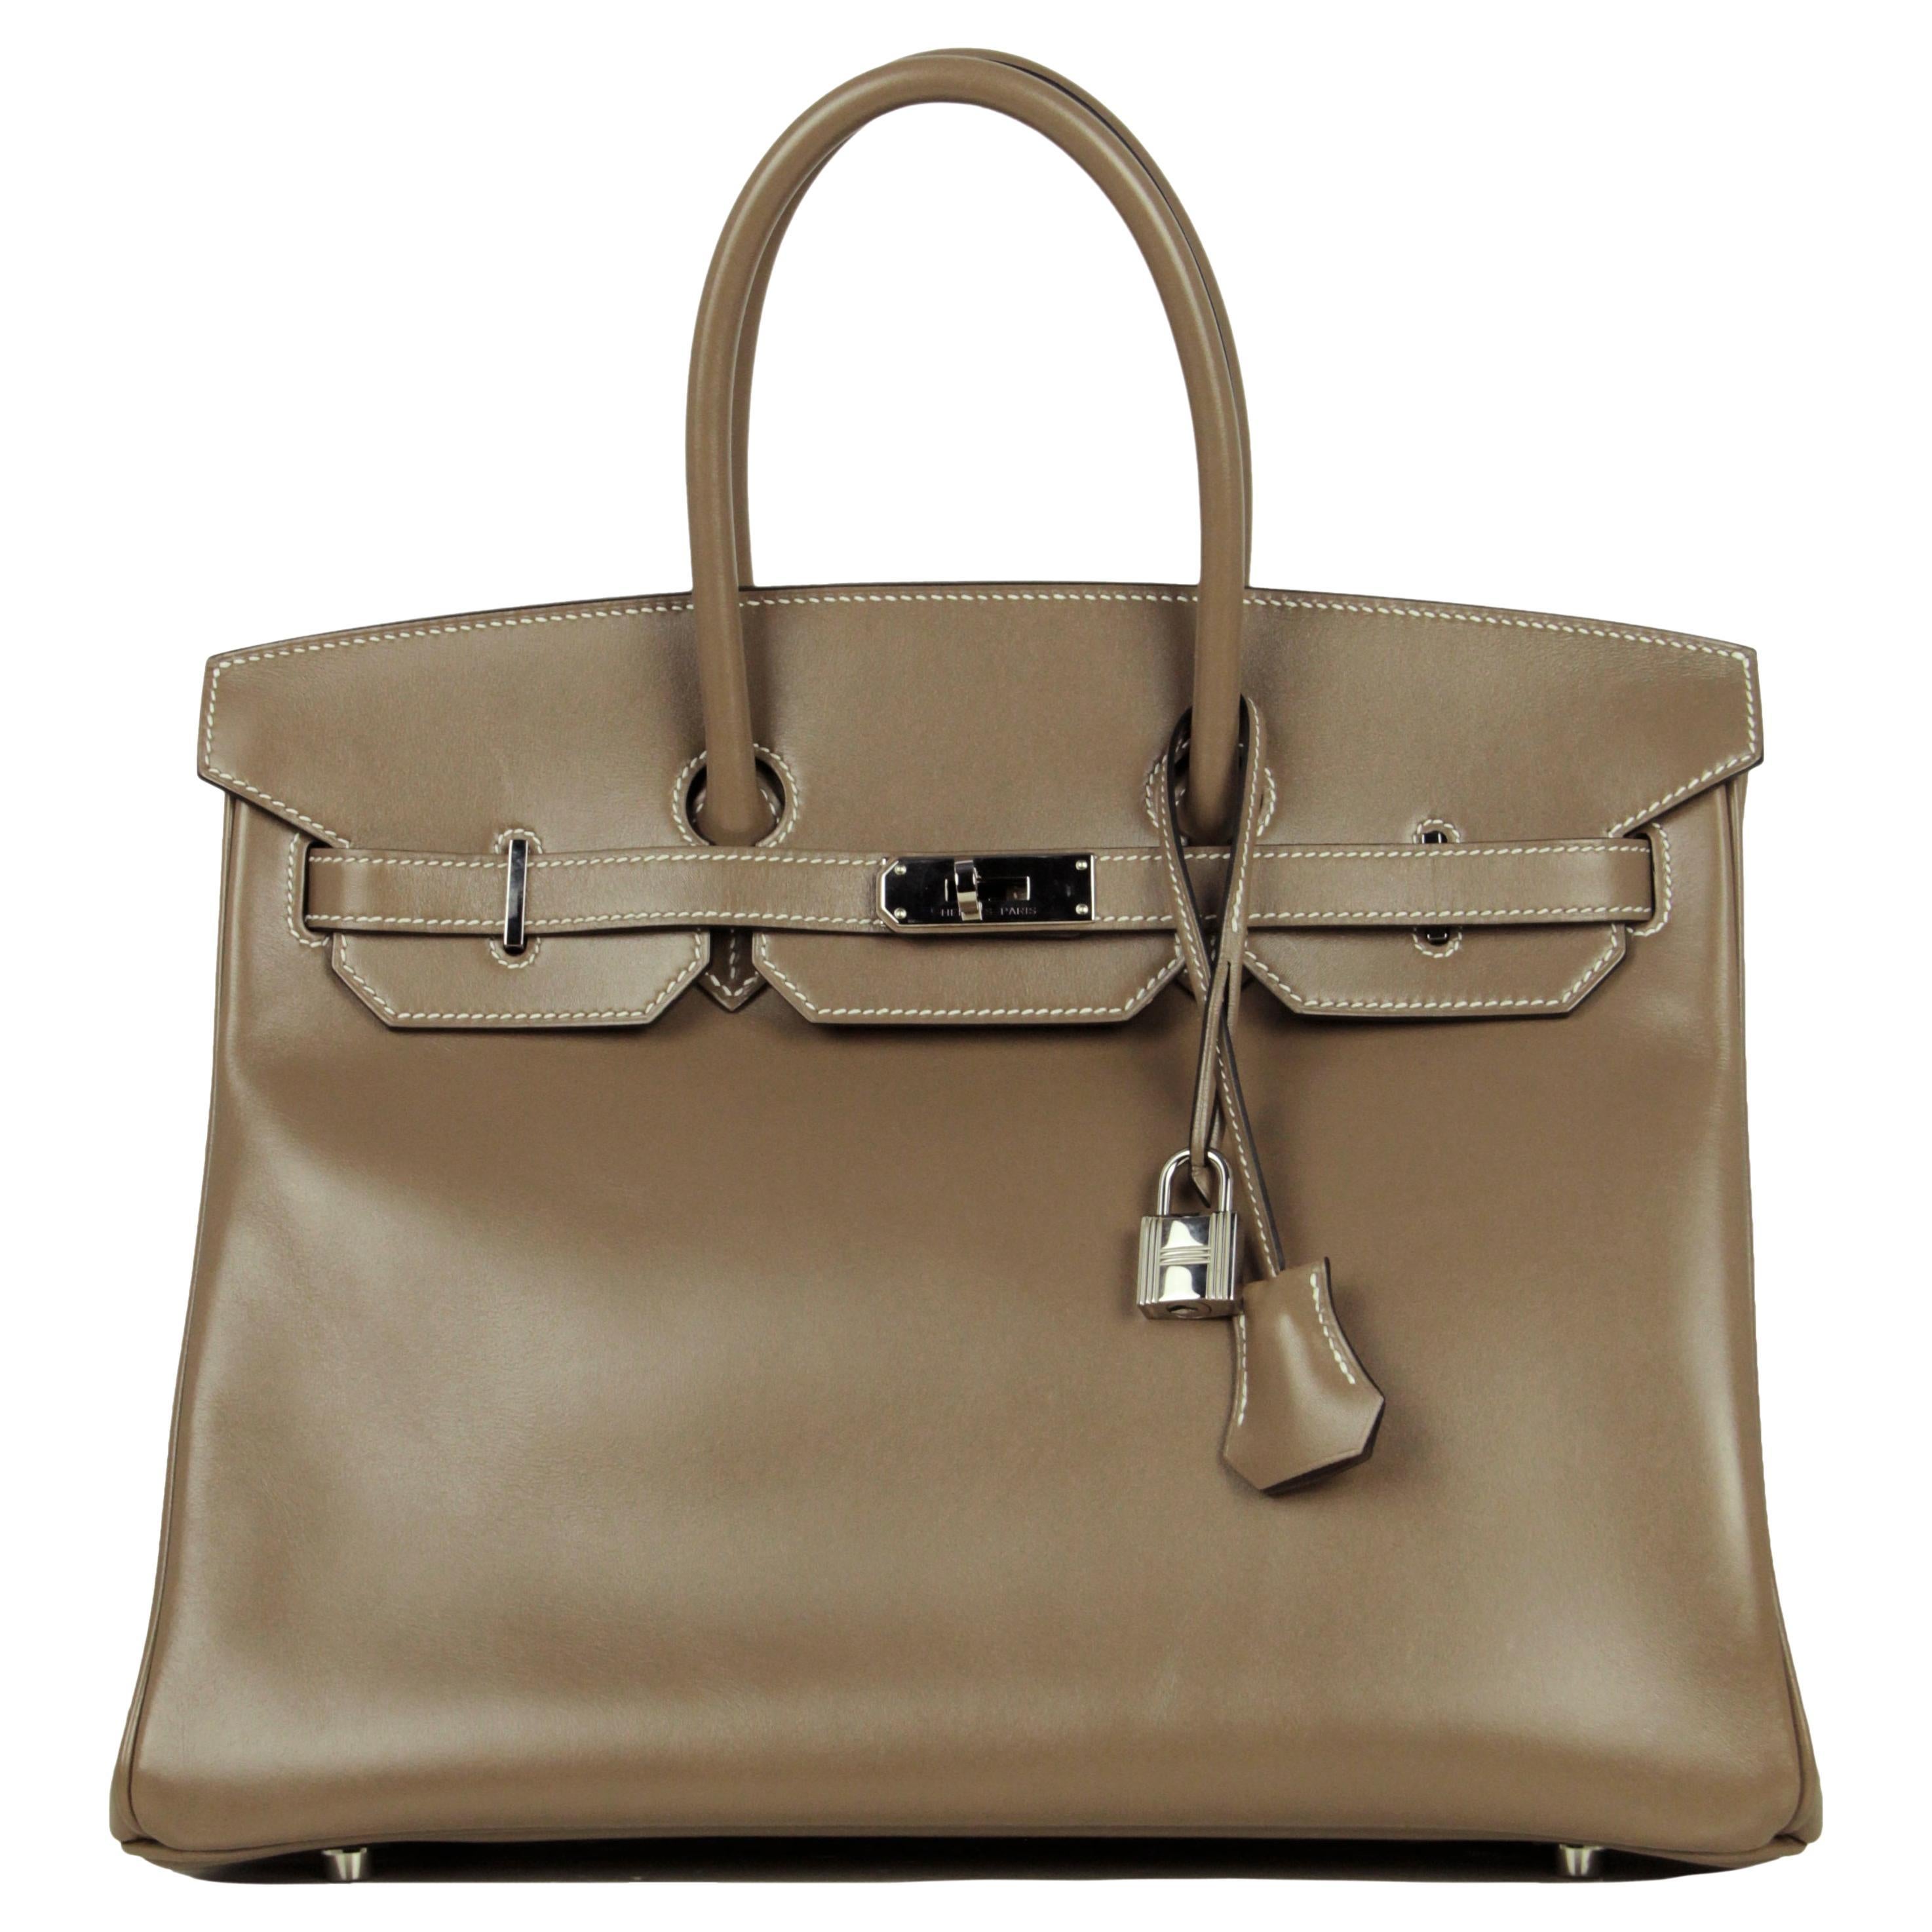 Hermes 2017 Etoupe Grey Tadelakt Leather 35cm Birkin Bag